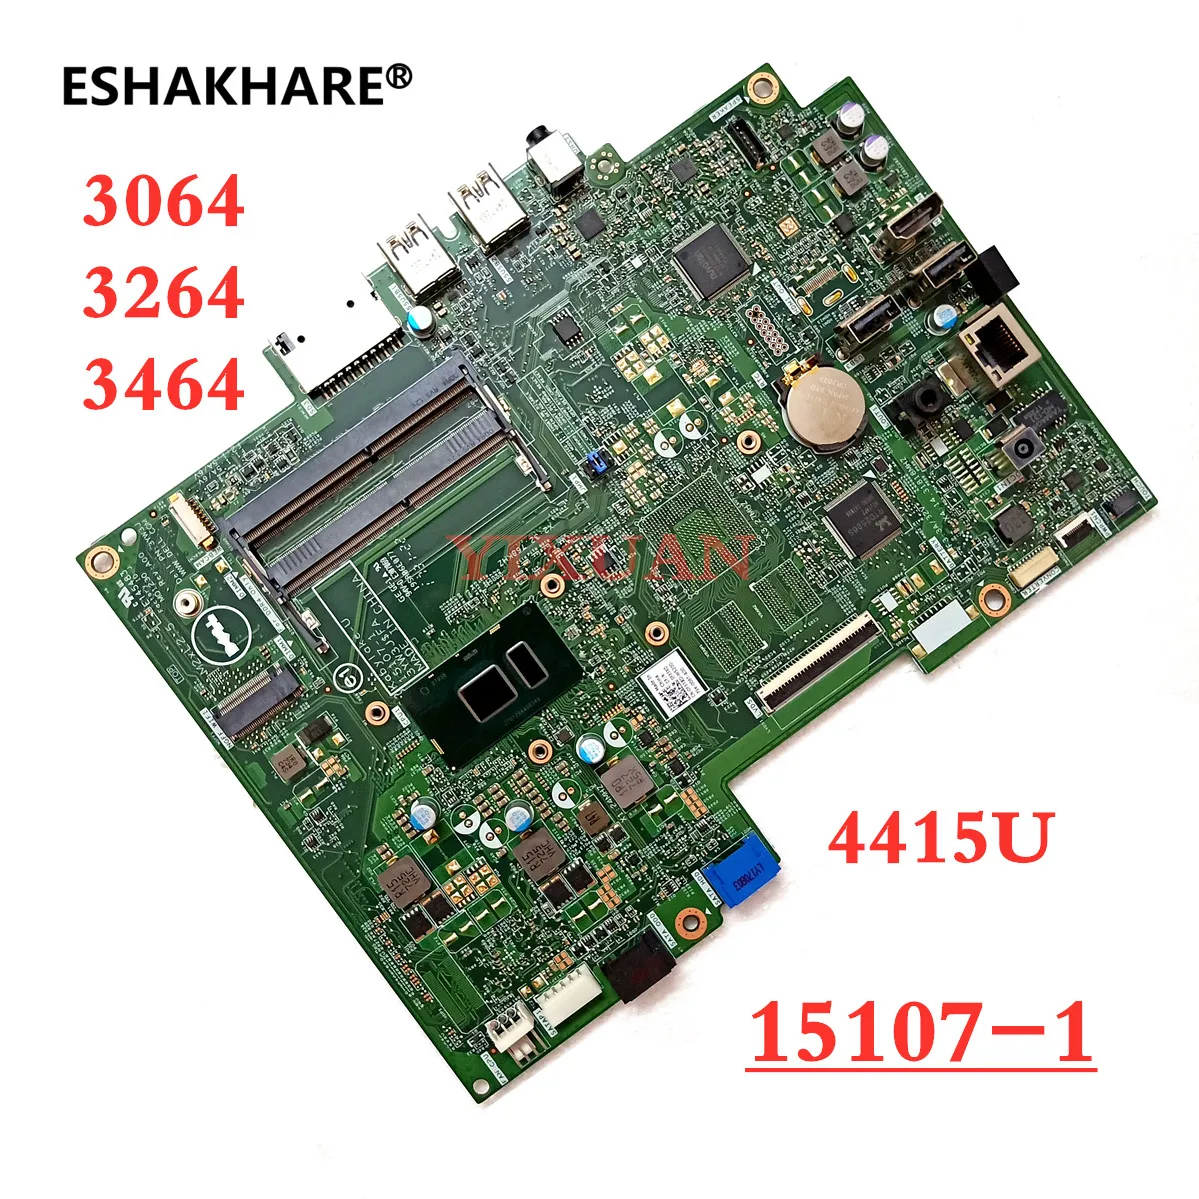     Lenovo ideapad D330-10IGM 81H3 CPU:N4000 RAM:4G SSD:64G HSB J MV-6 E89382 5B20R54684 330-10IGM Test Ok